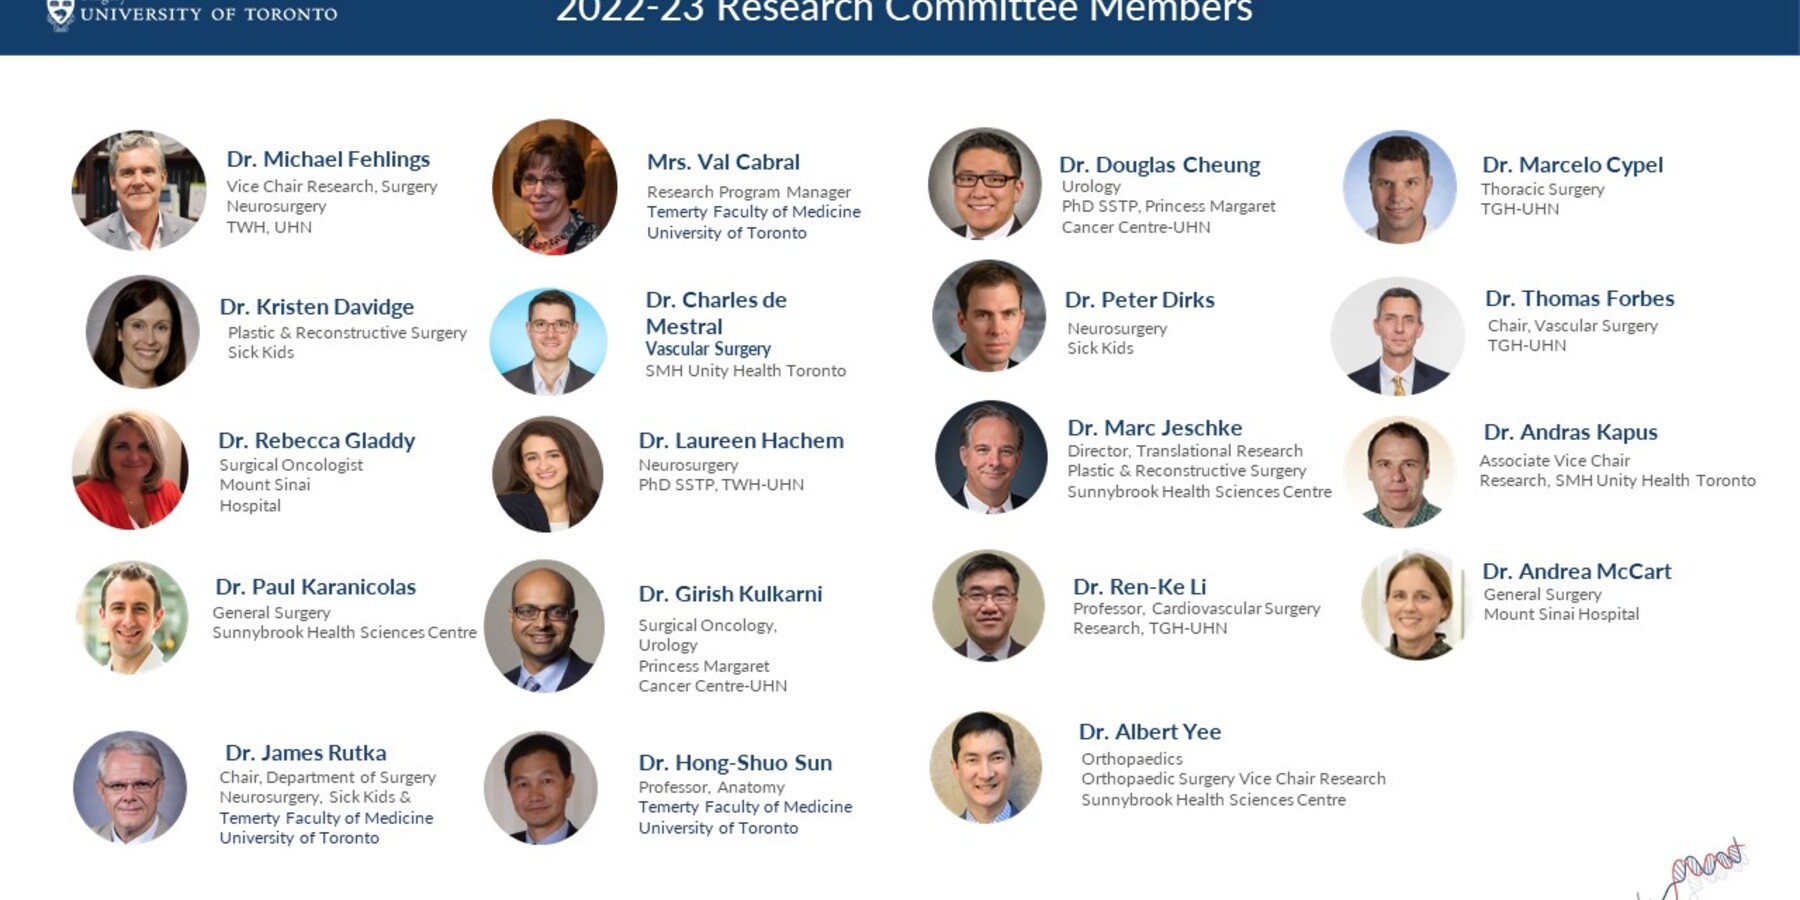 2022 Research Committee Members